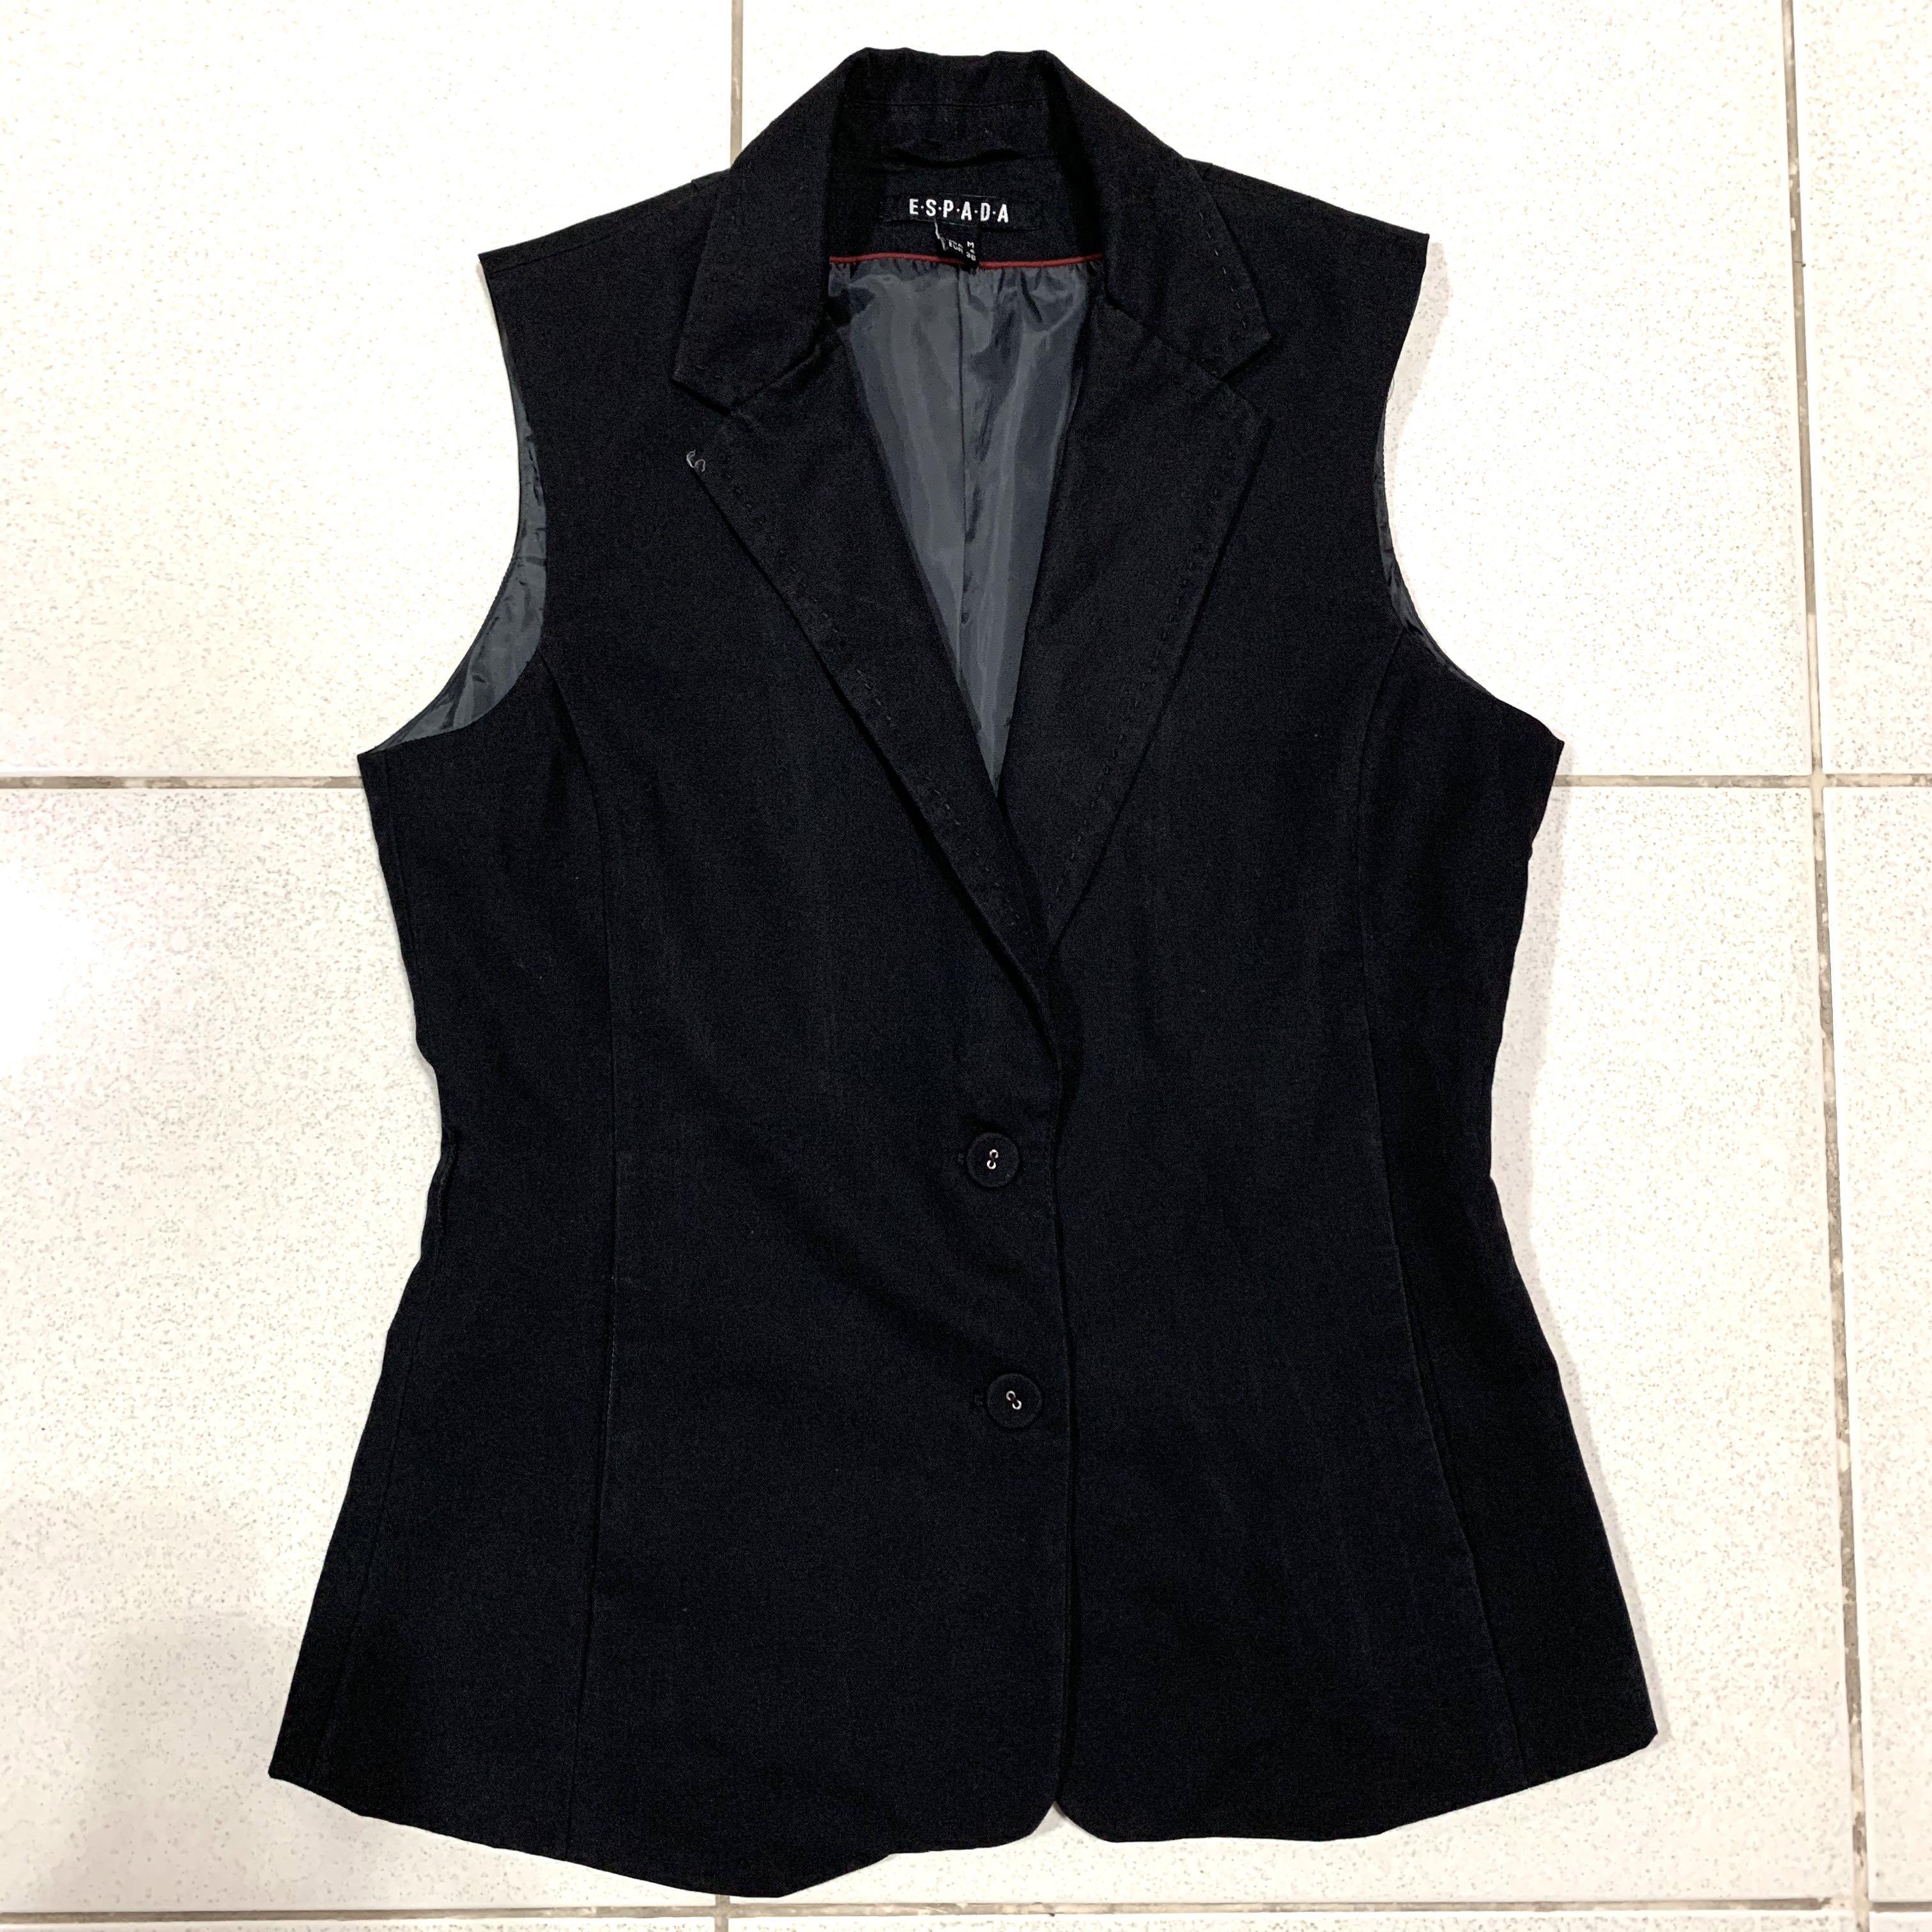 business attire vest